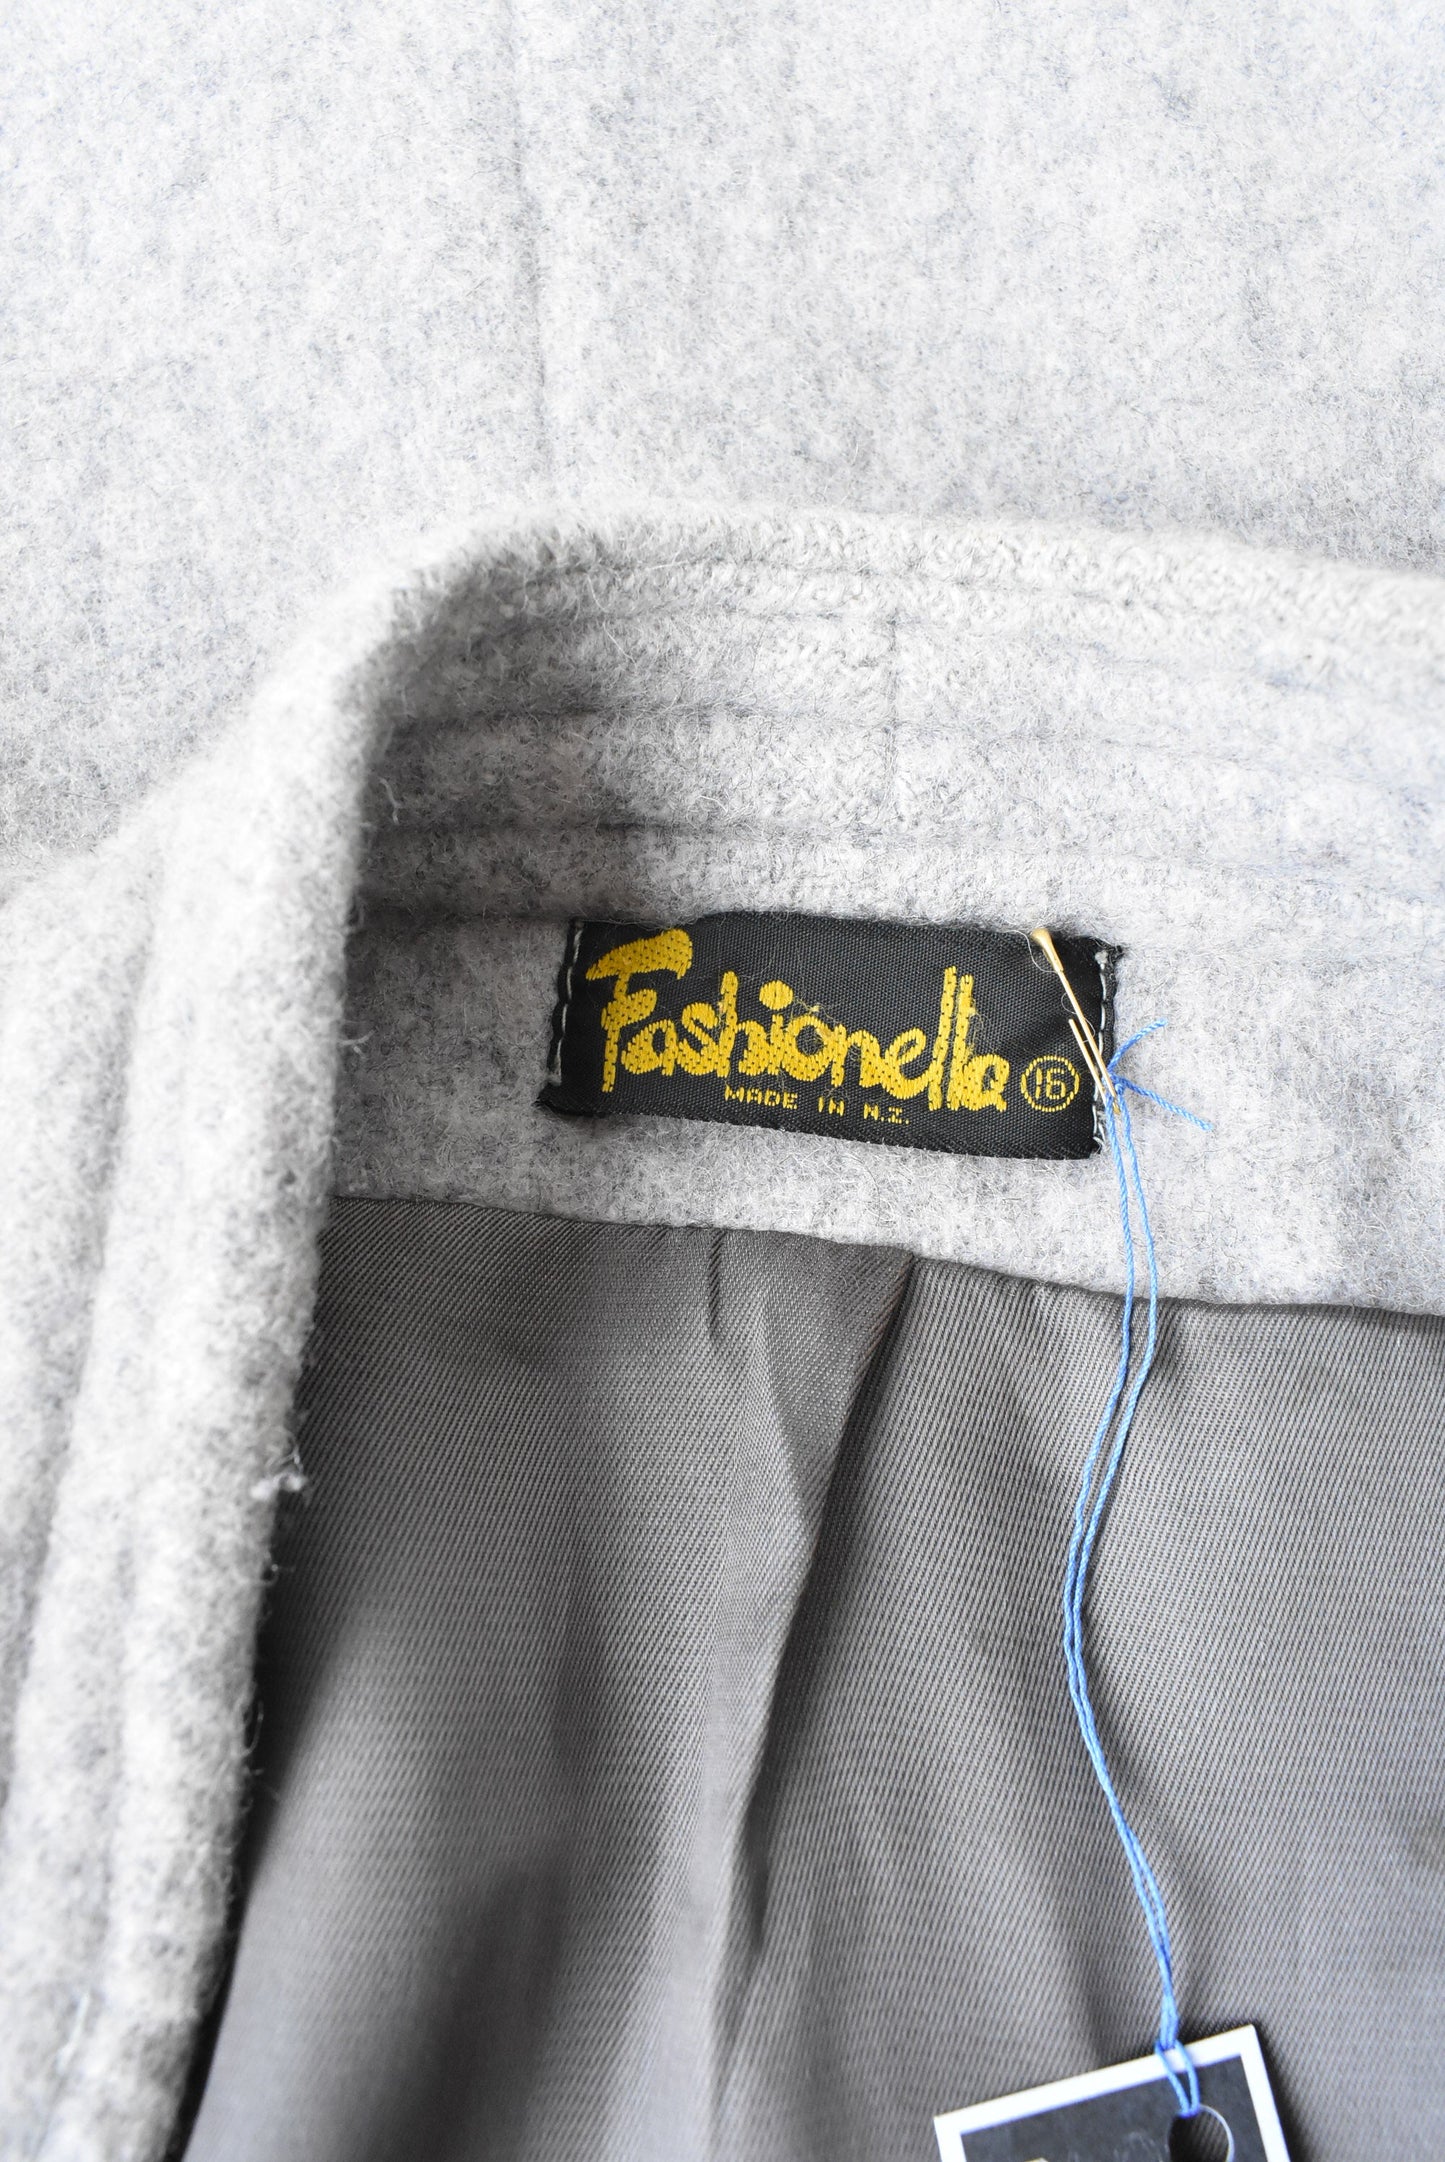 Fashionelle retro wool grey jacket, size 16